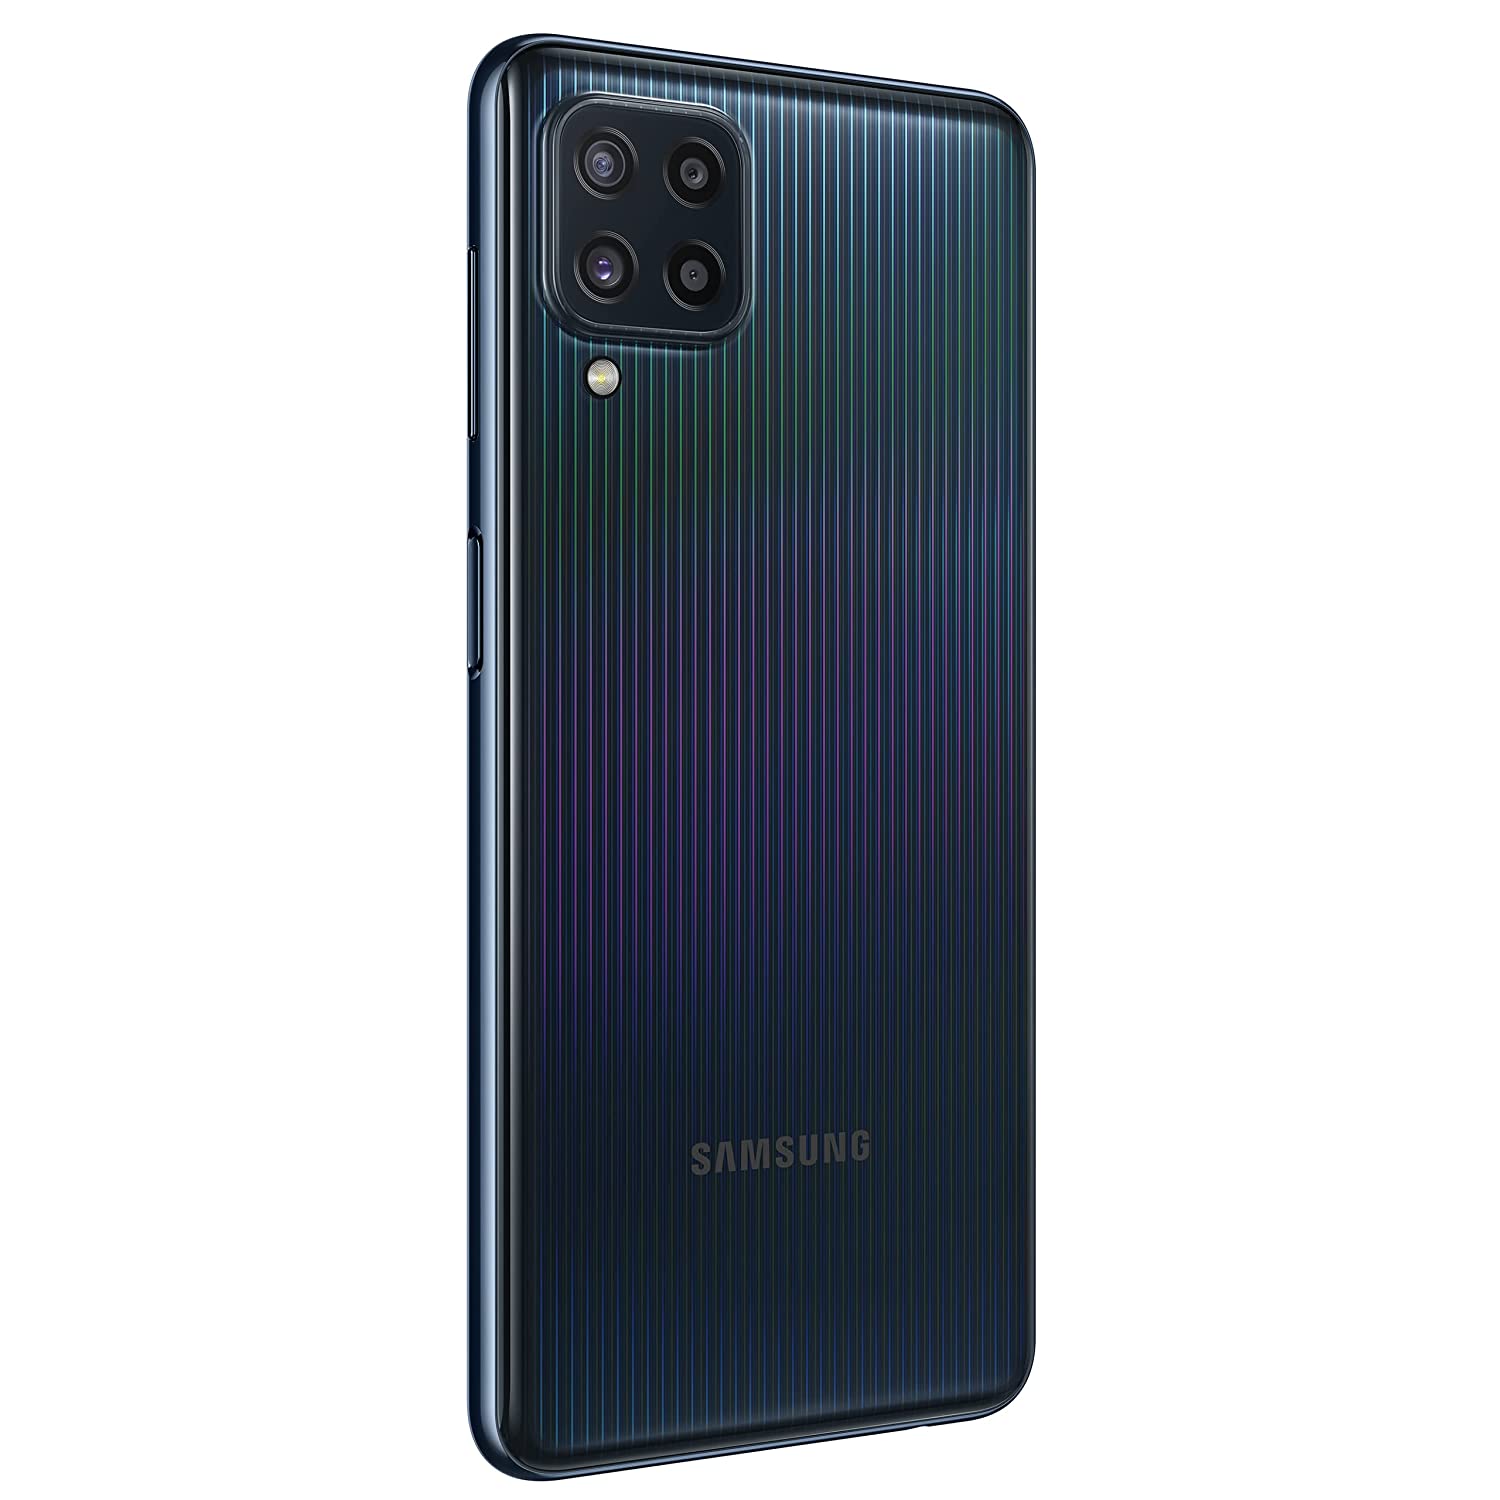 SAMSUNG Galaxy M32 (Black, 64 GB)  (4 GB RAM)